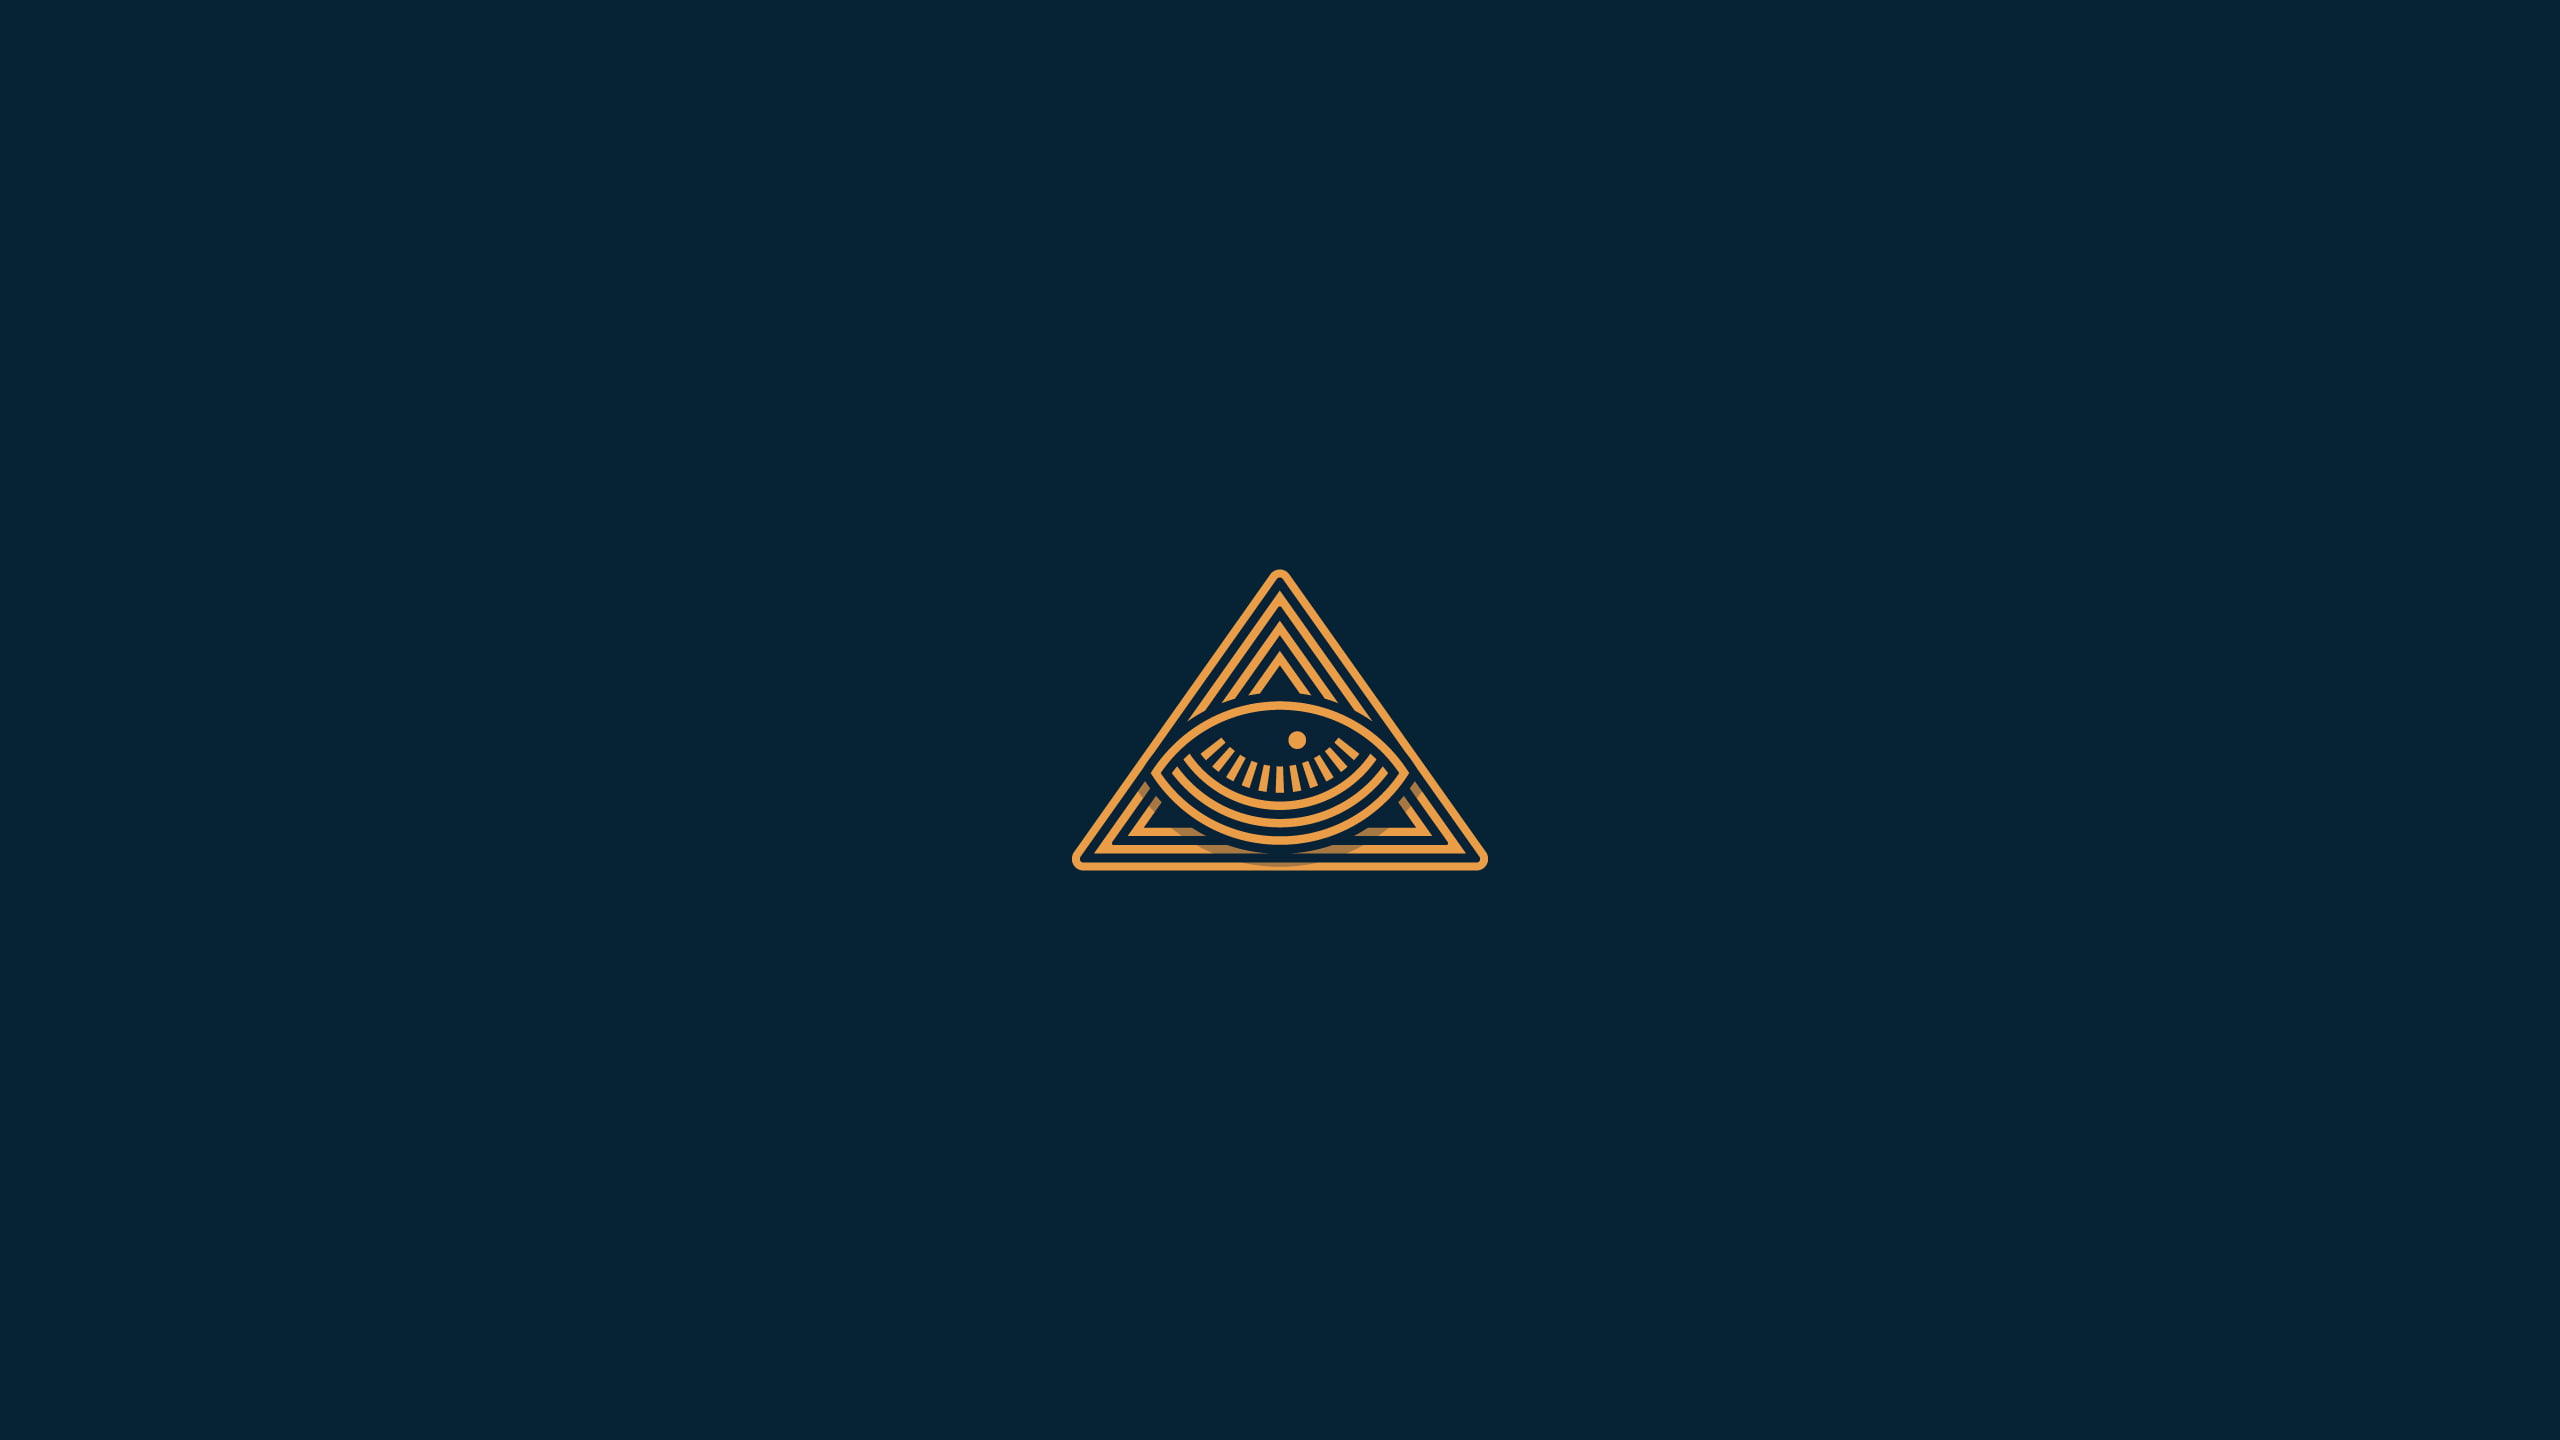 eye of providence wall paper, graphic design, blue background, Illuminati, pyramid